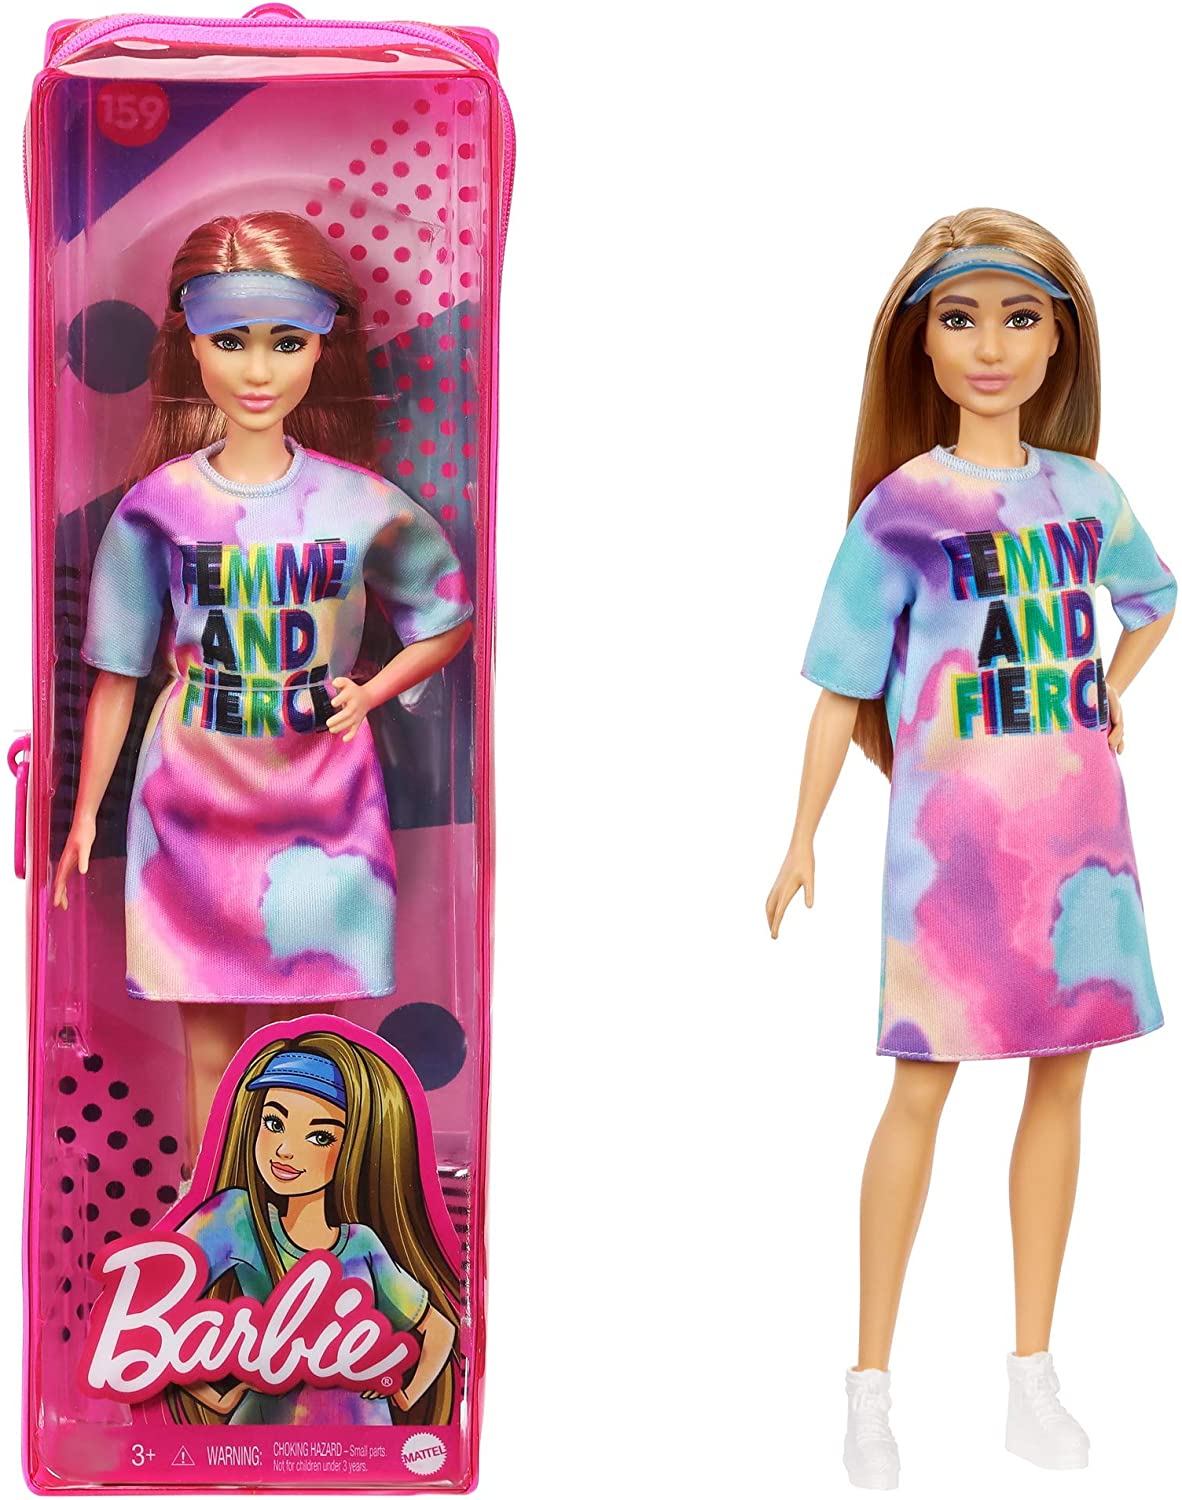 Barbie Fashionistas Doll #159, Petite Wearing Tie-Dye T-Shirt Dress $5.39 - Amazon